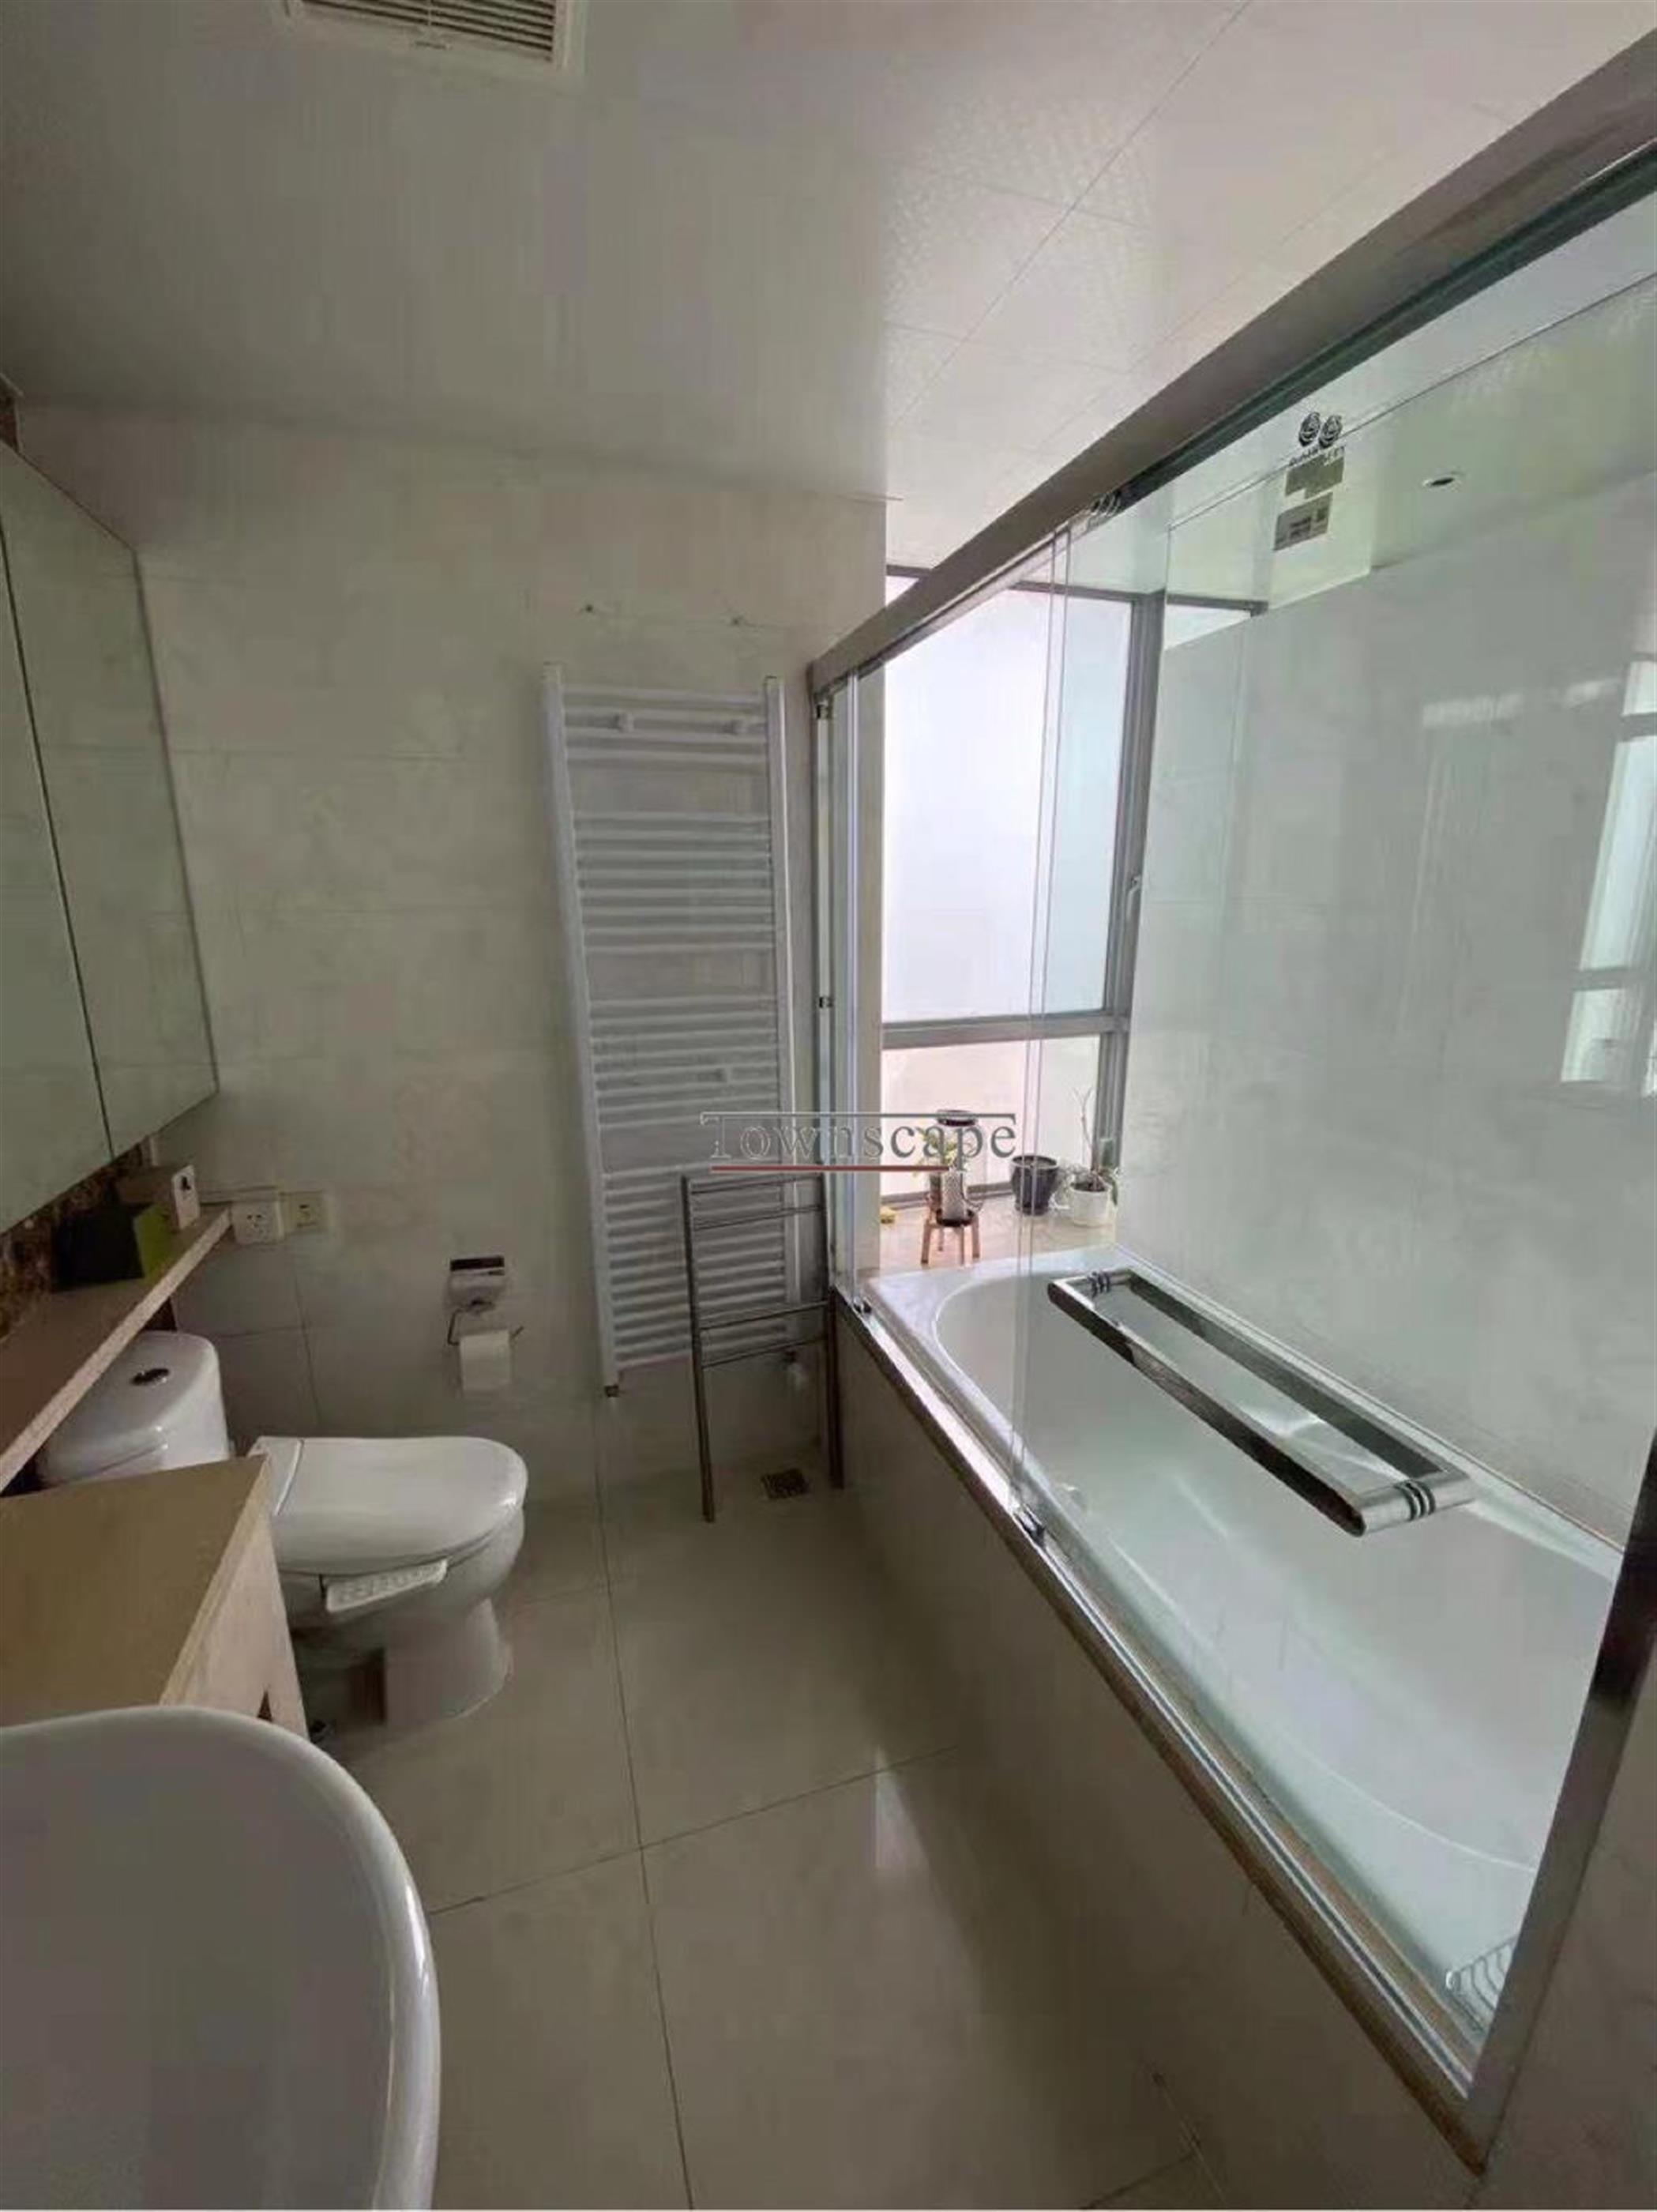 bathtub Fabulous Spacious Le Cite 3BR Apt in the Clouds Nr LN 1/9/11 for Rent in Shanghai’s Xujiahui